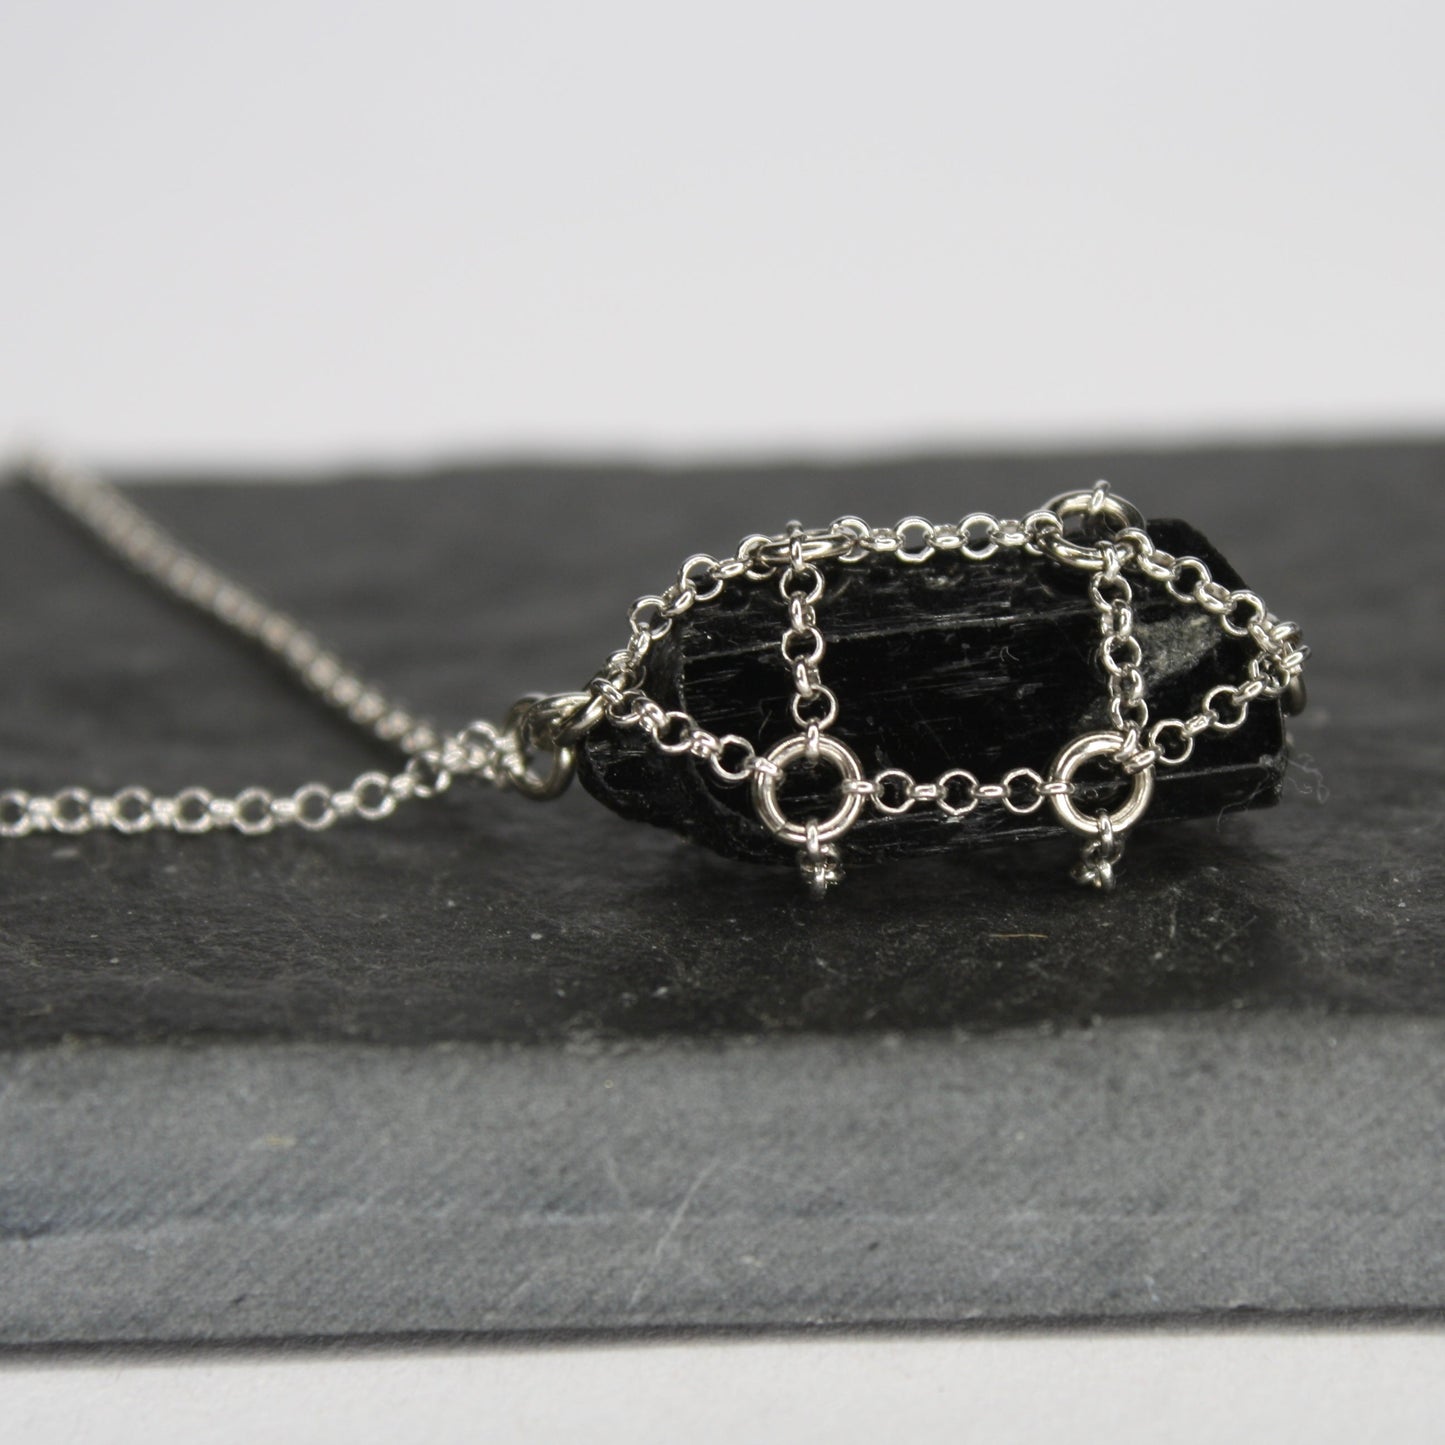 Caged Black Tourmaline Necklace